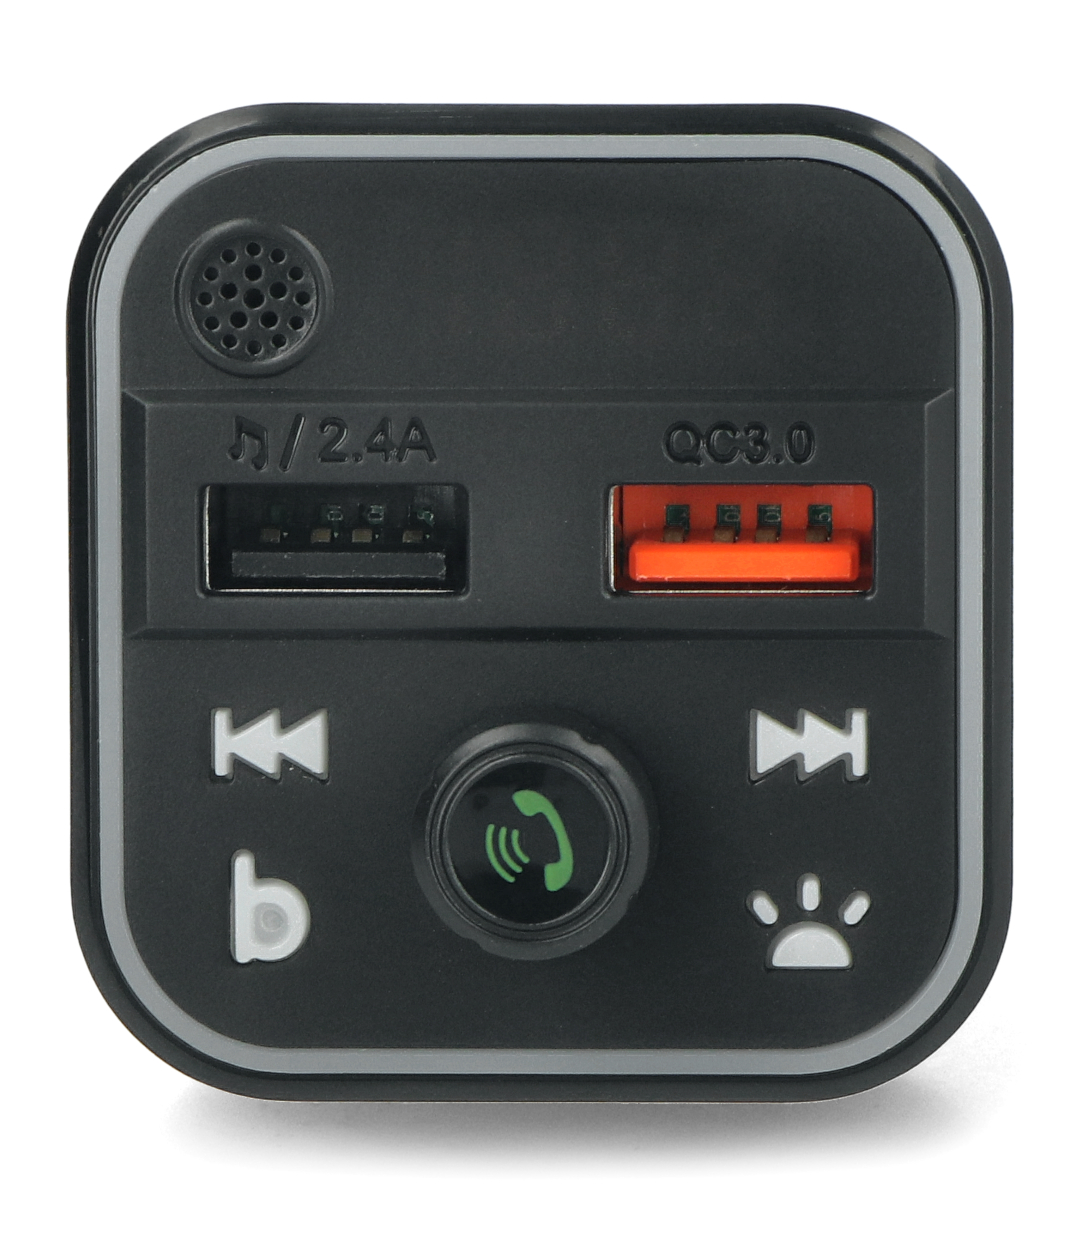 Bluetooth 5.0 Auto FM Transmitter, QC3.0 Drahtloser Bluetooth Adapter Auto  Musik Transmitter Kit mit Freisprech & 2 USB Autoladegerät